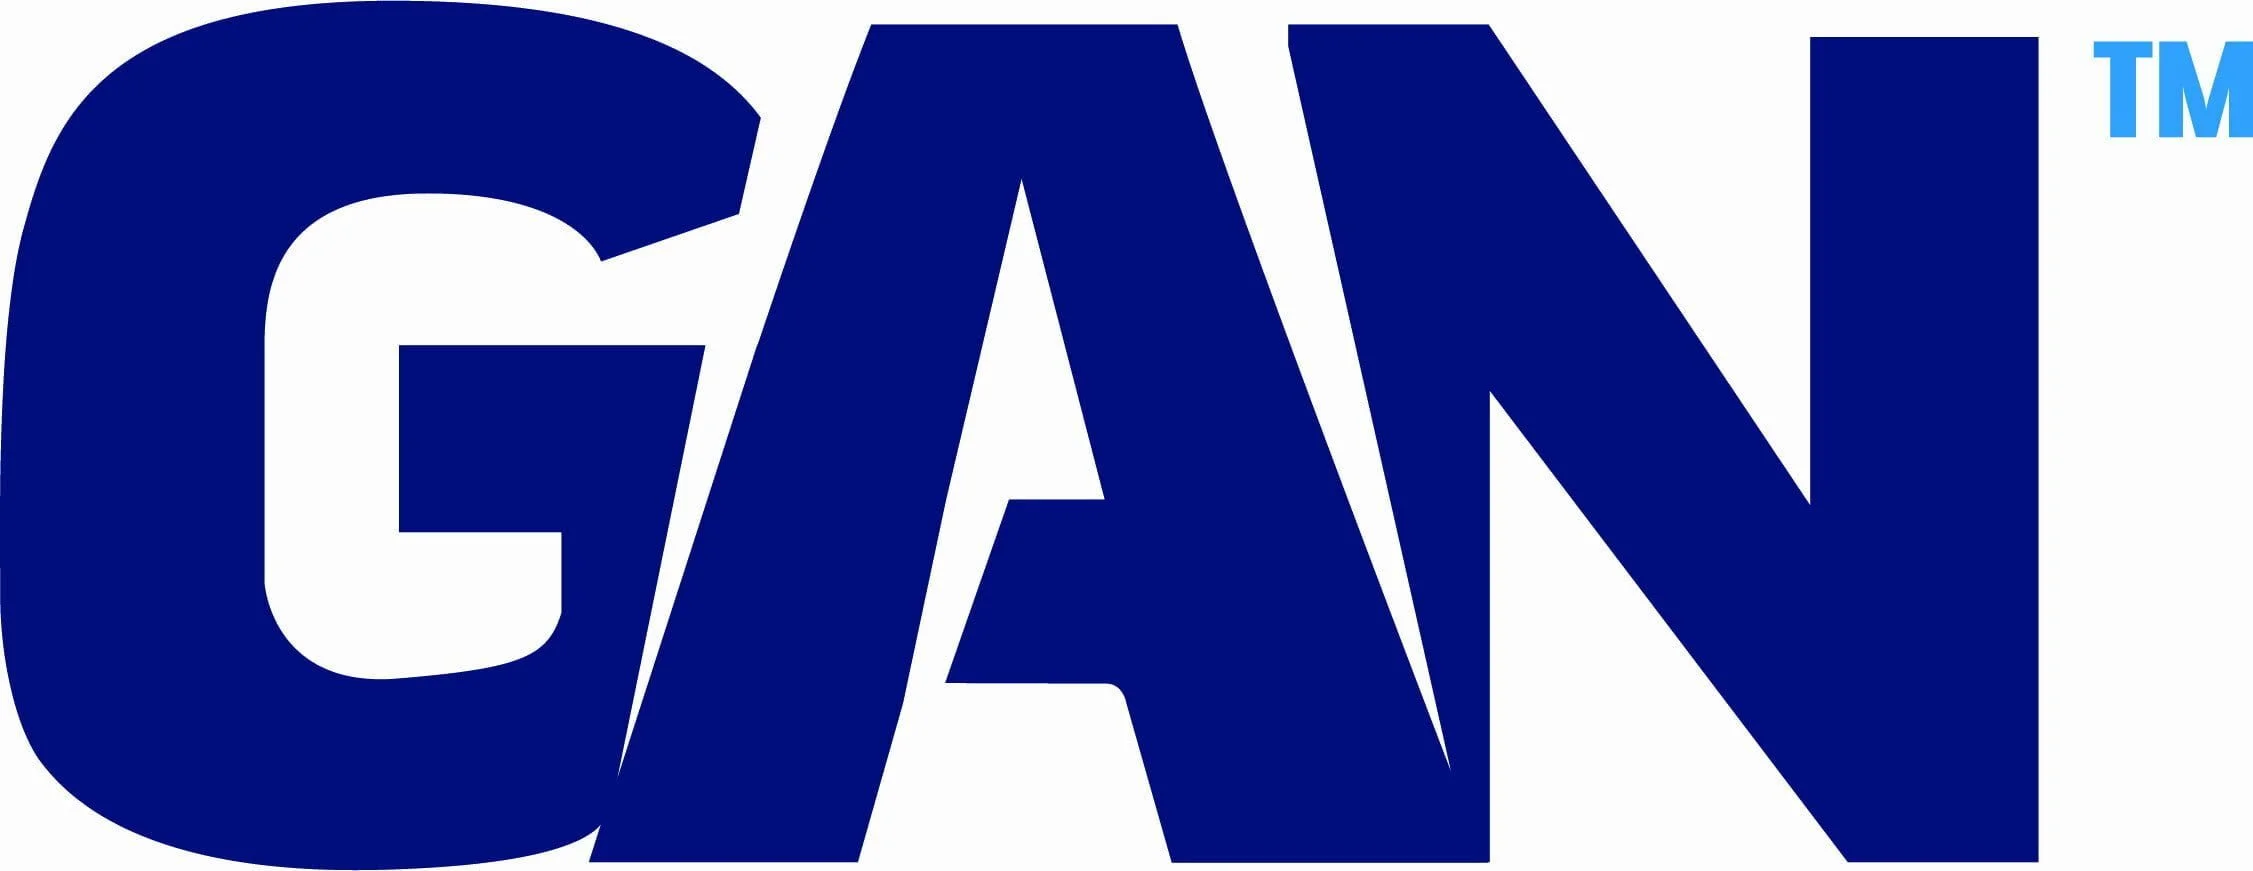 Film industry logo design | Industry logo, Logo design, Business logo design